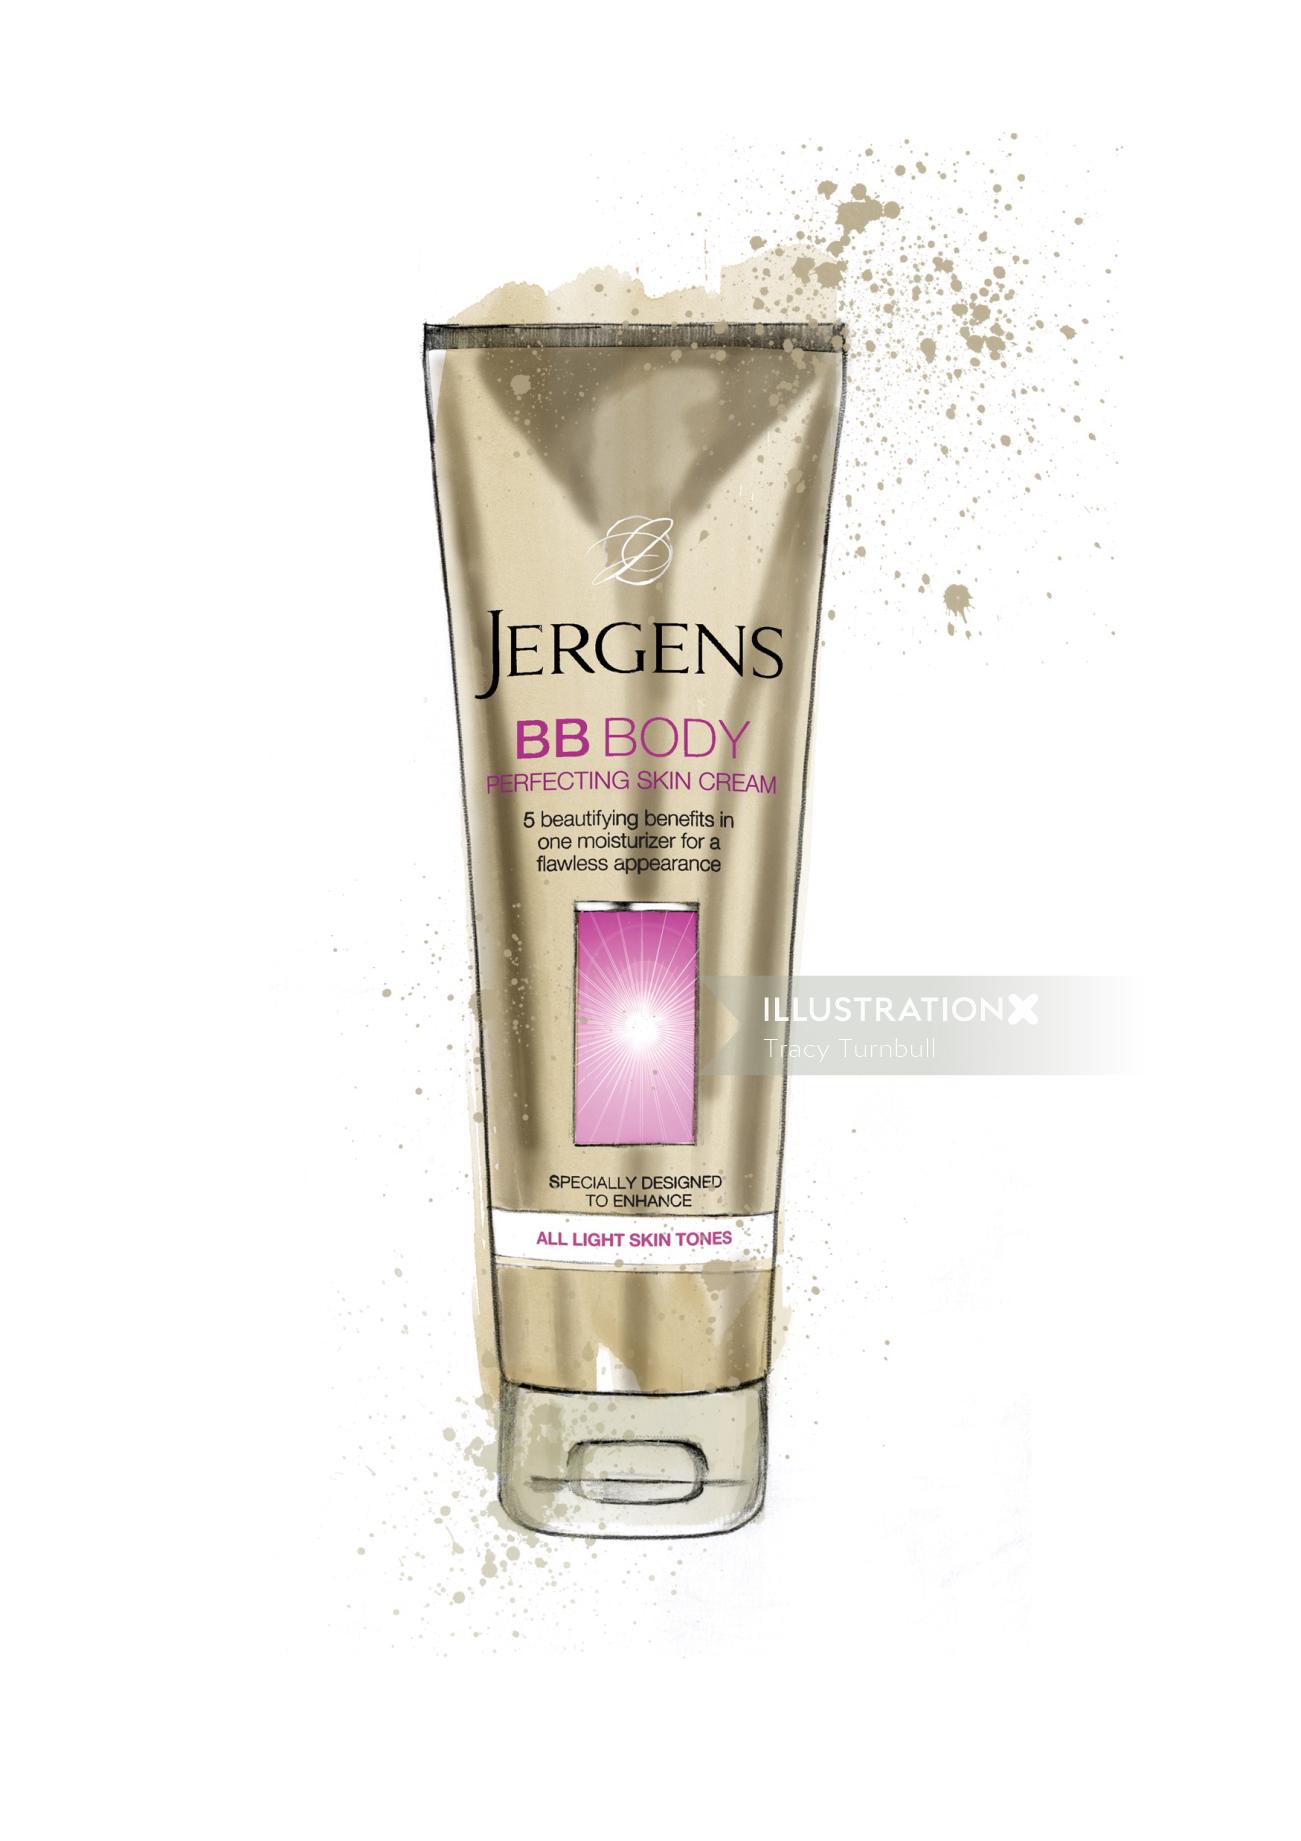 Jergens bb body perfecting skin cream product illustration